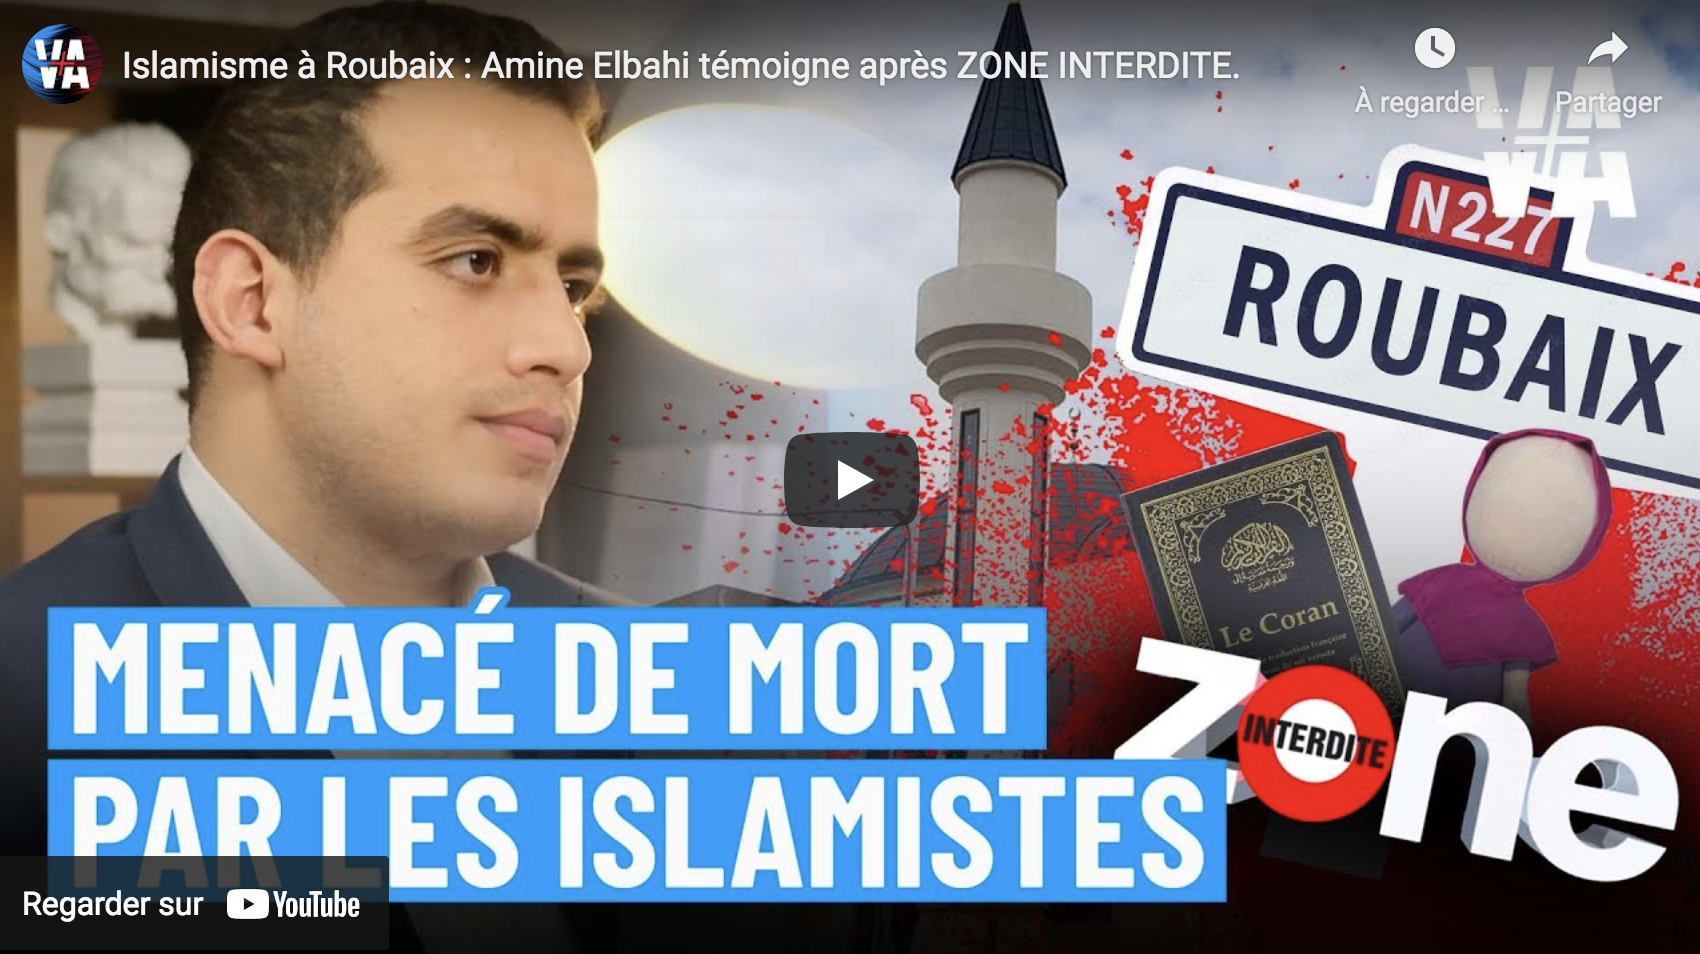 Islamisme à Roubaix : Amine Elbahi témoigne après “Zone Interdite” (VIDÉO)